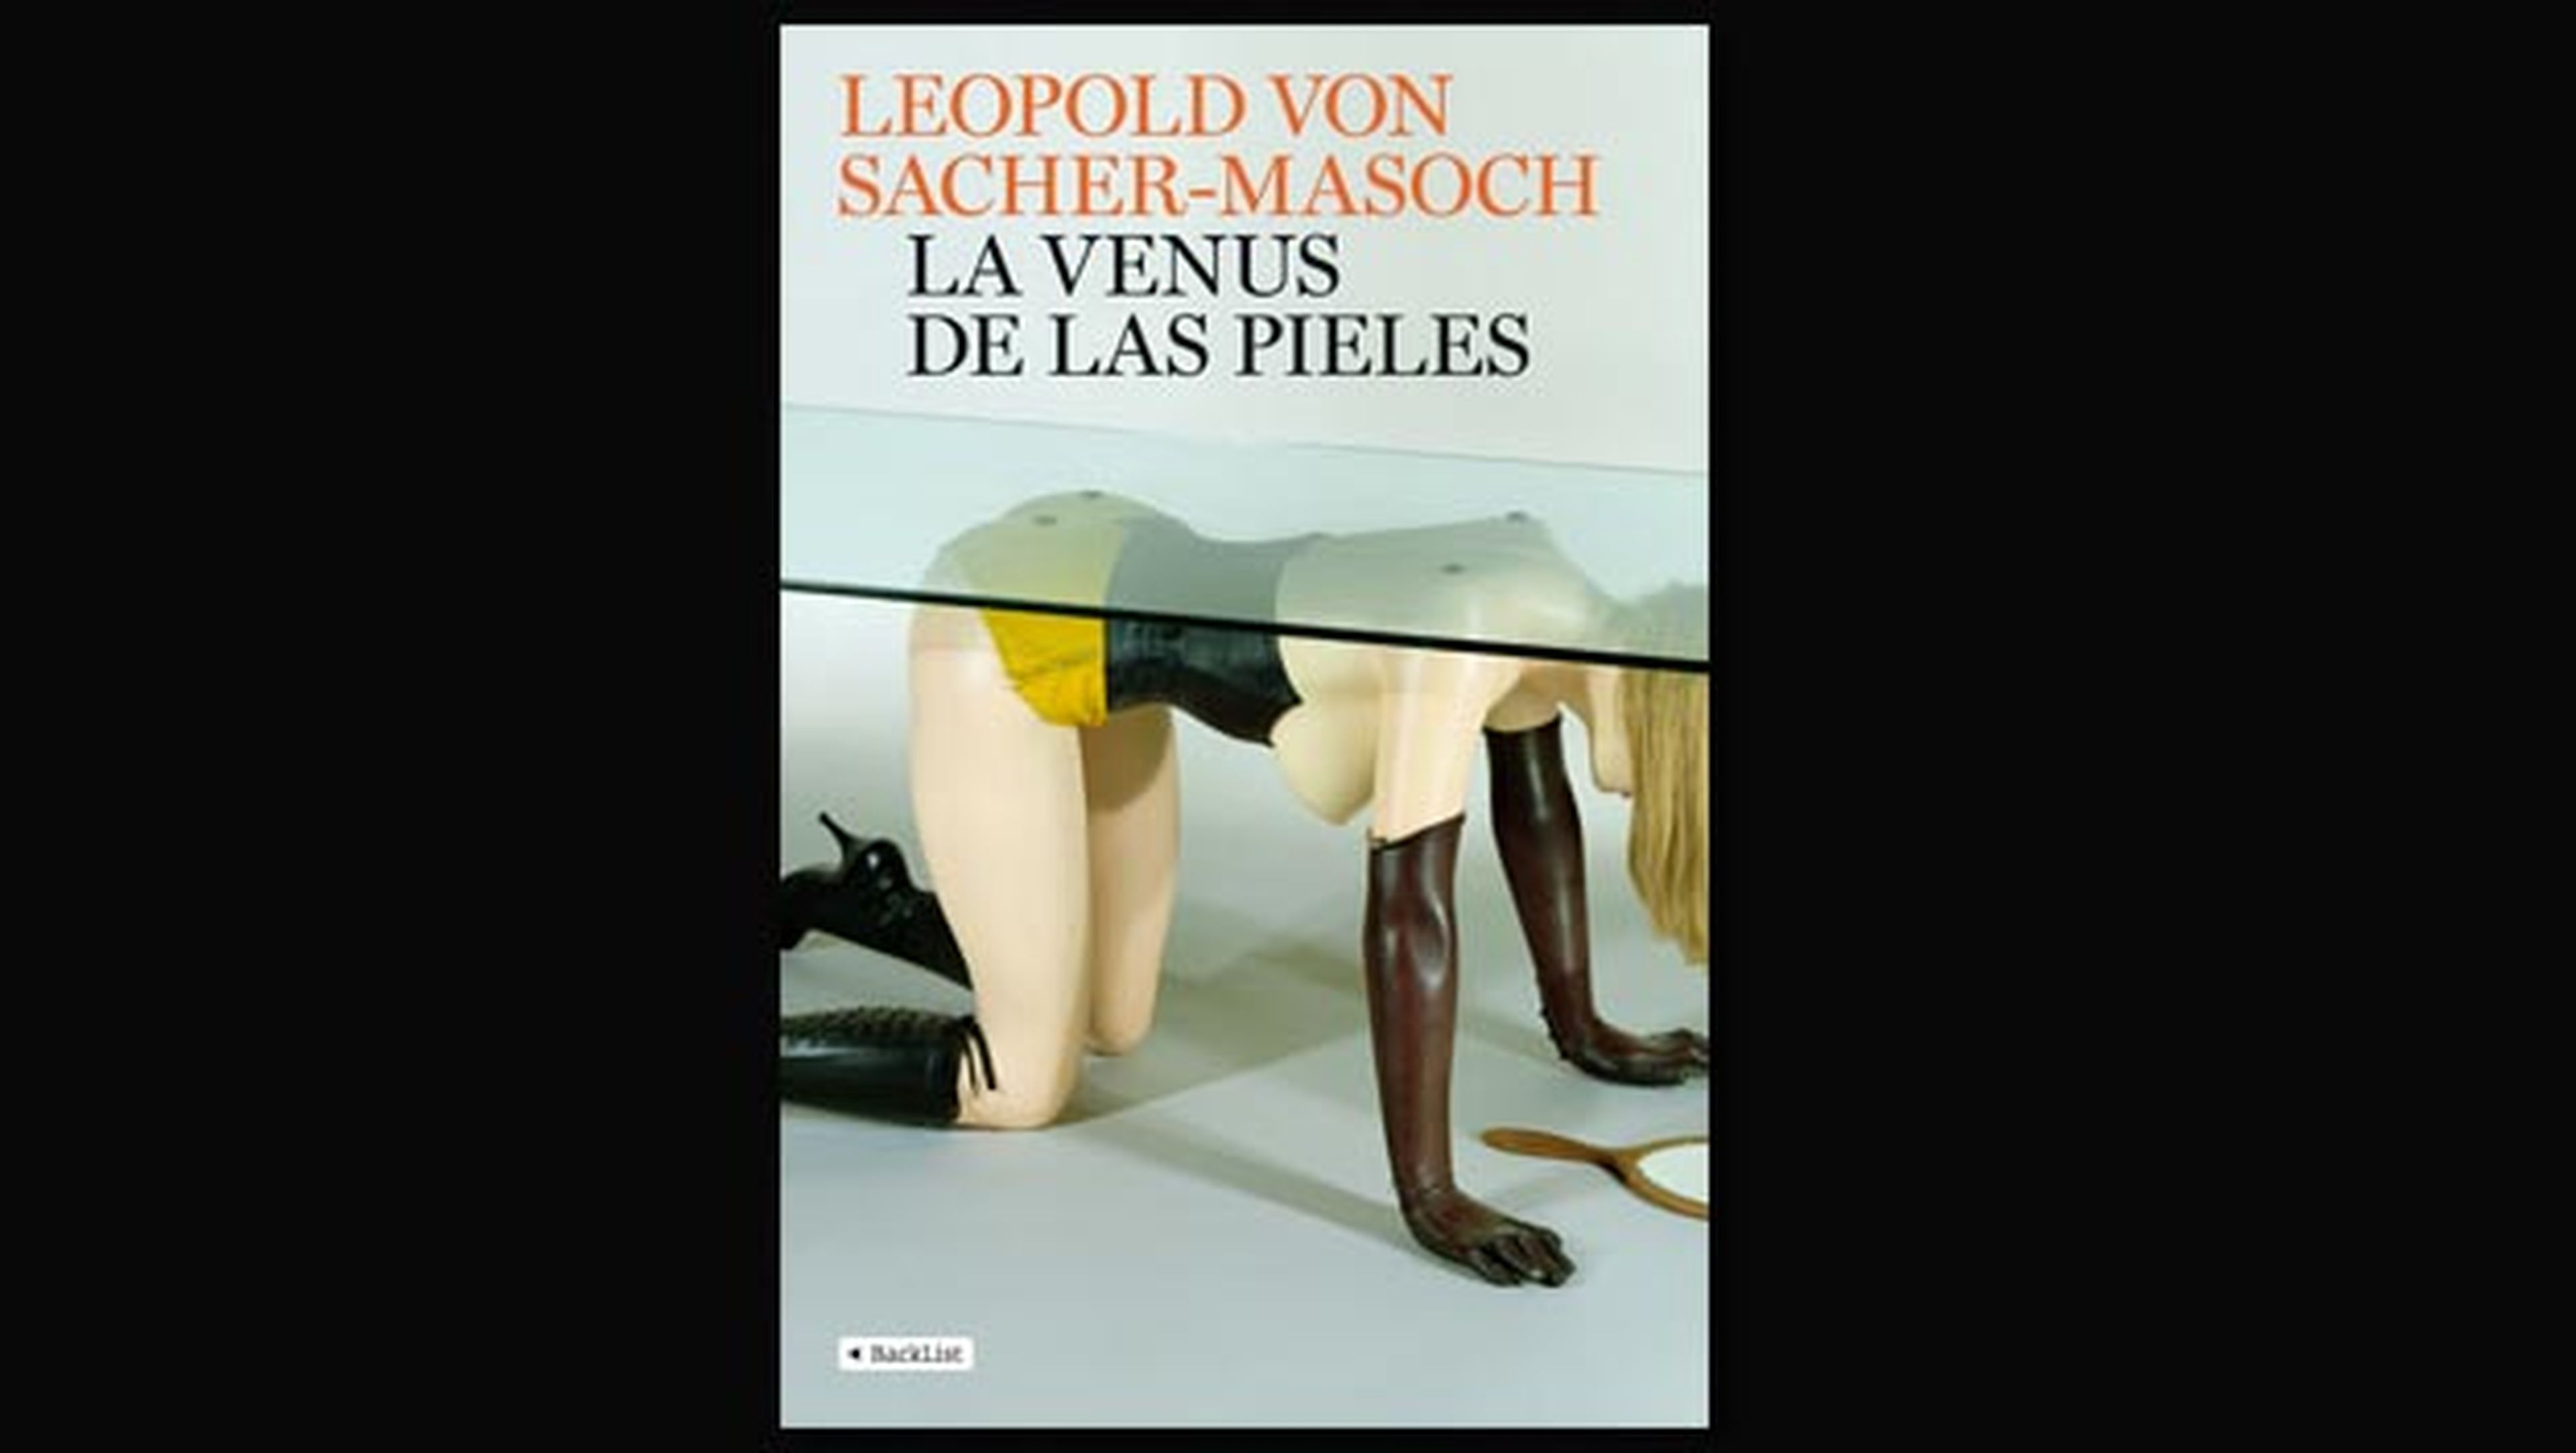 La Venus de las pieles, Leopold von Sacher- Masoch